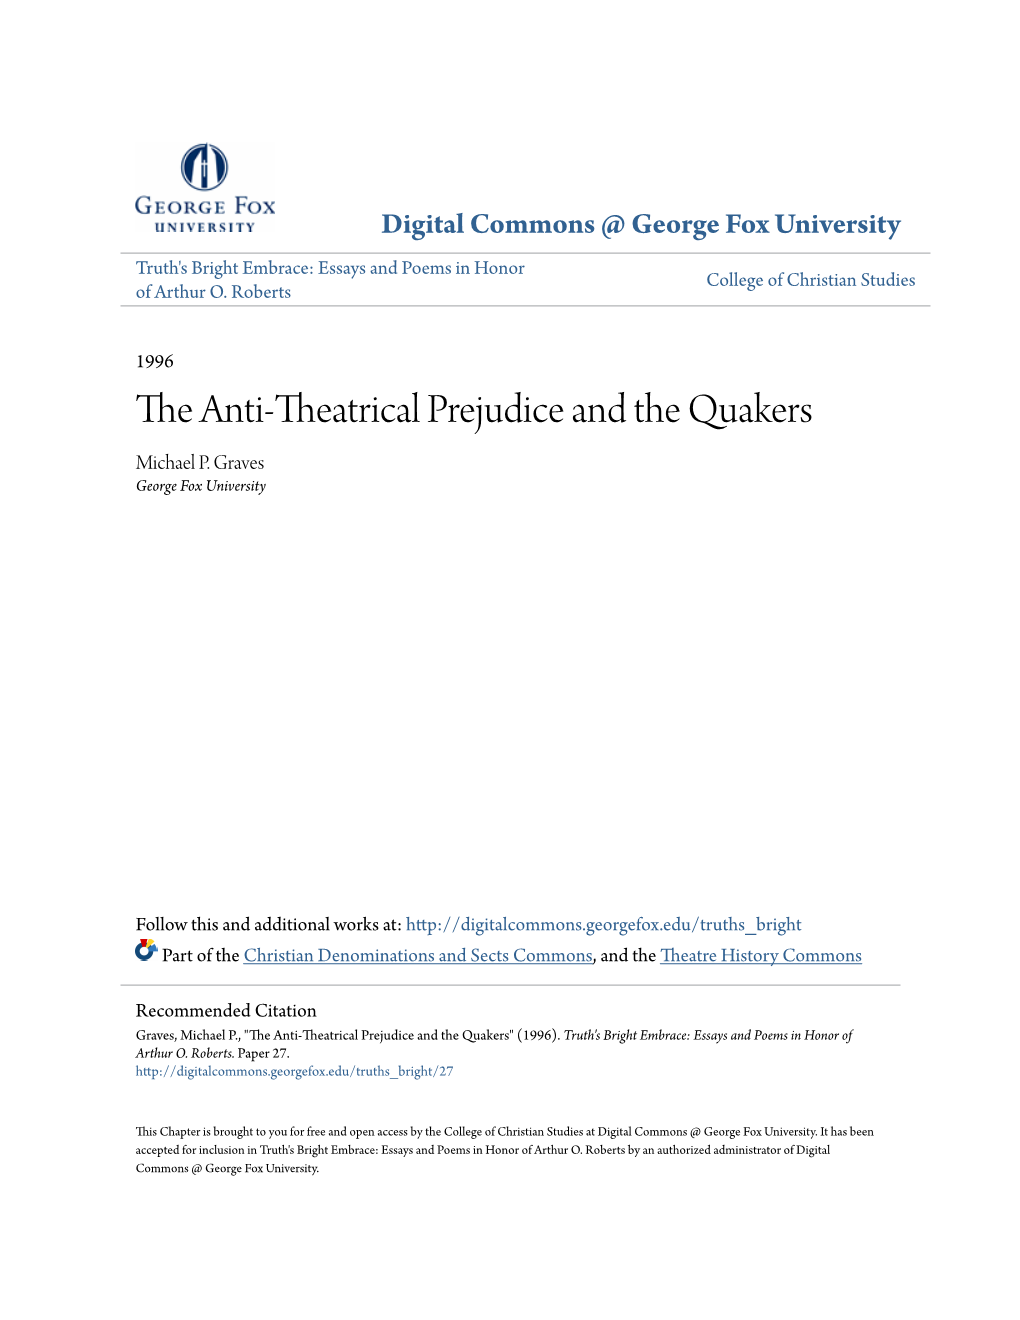 The Anti-Theatrical Prejudice and the Quakers Michael P